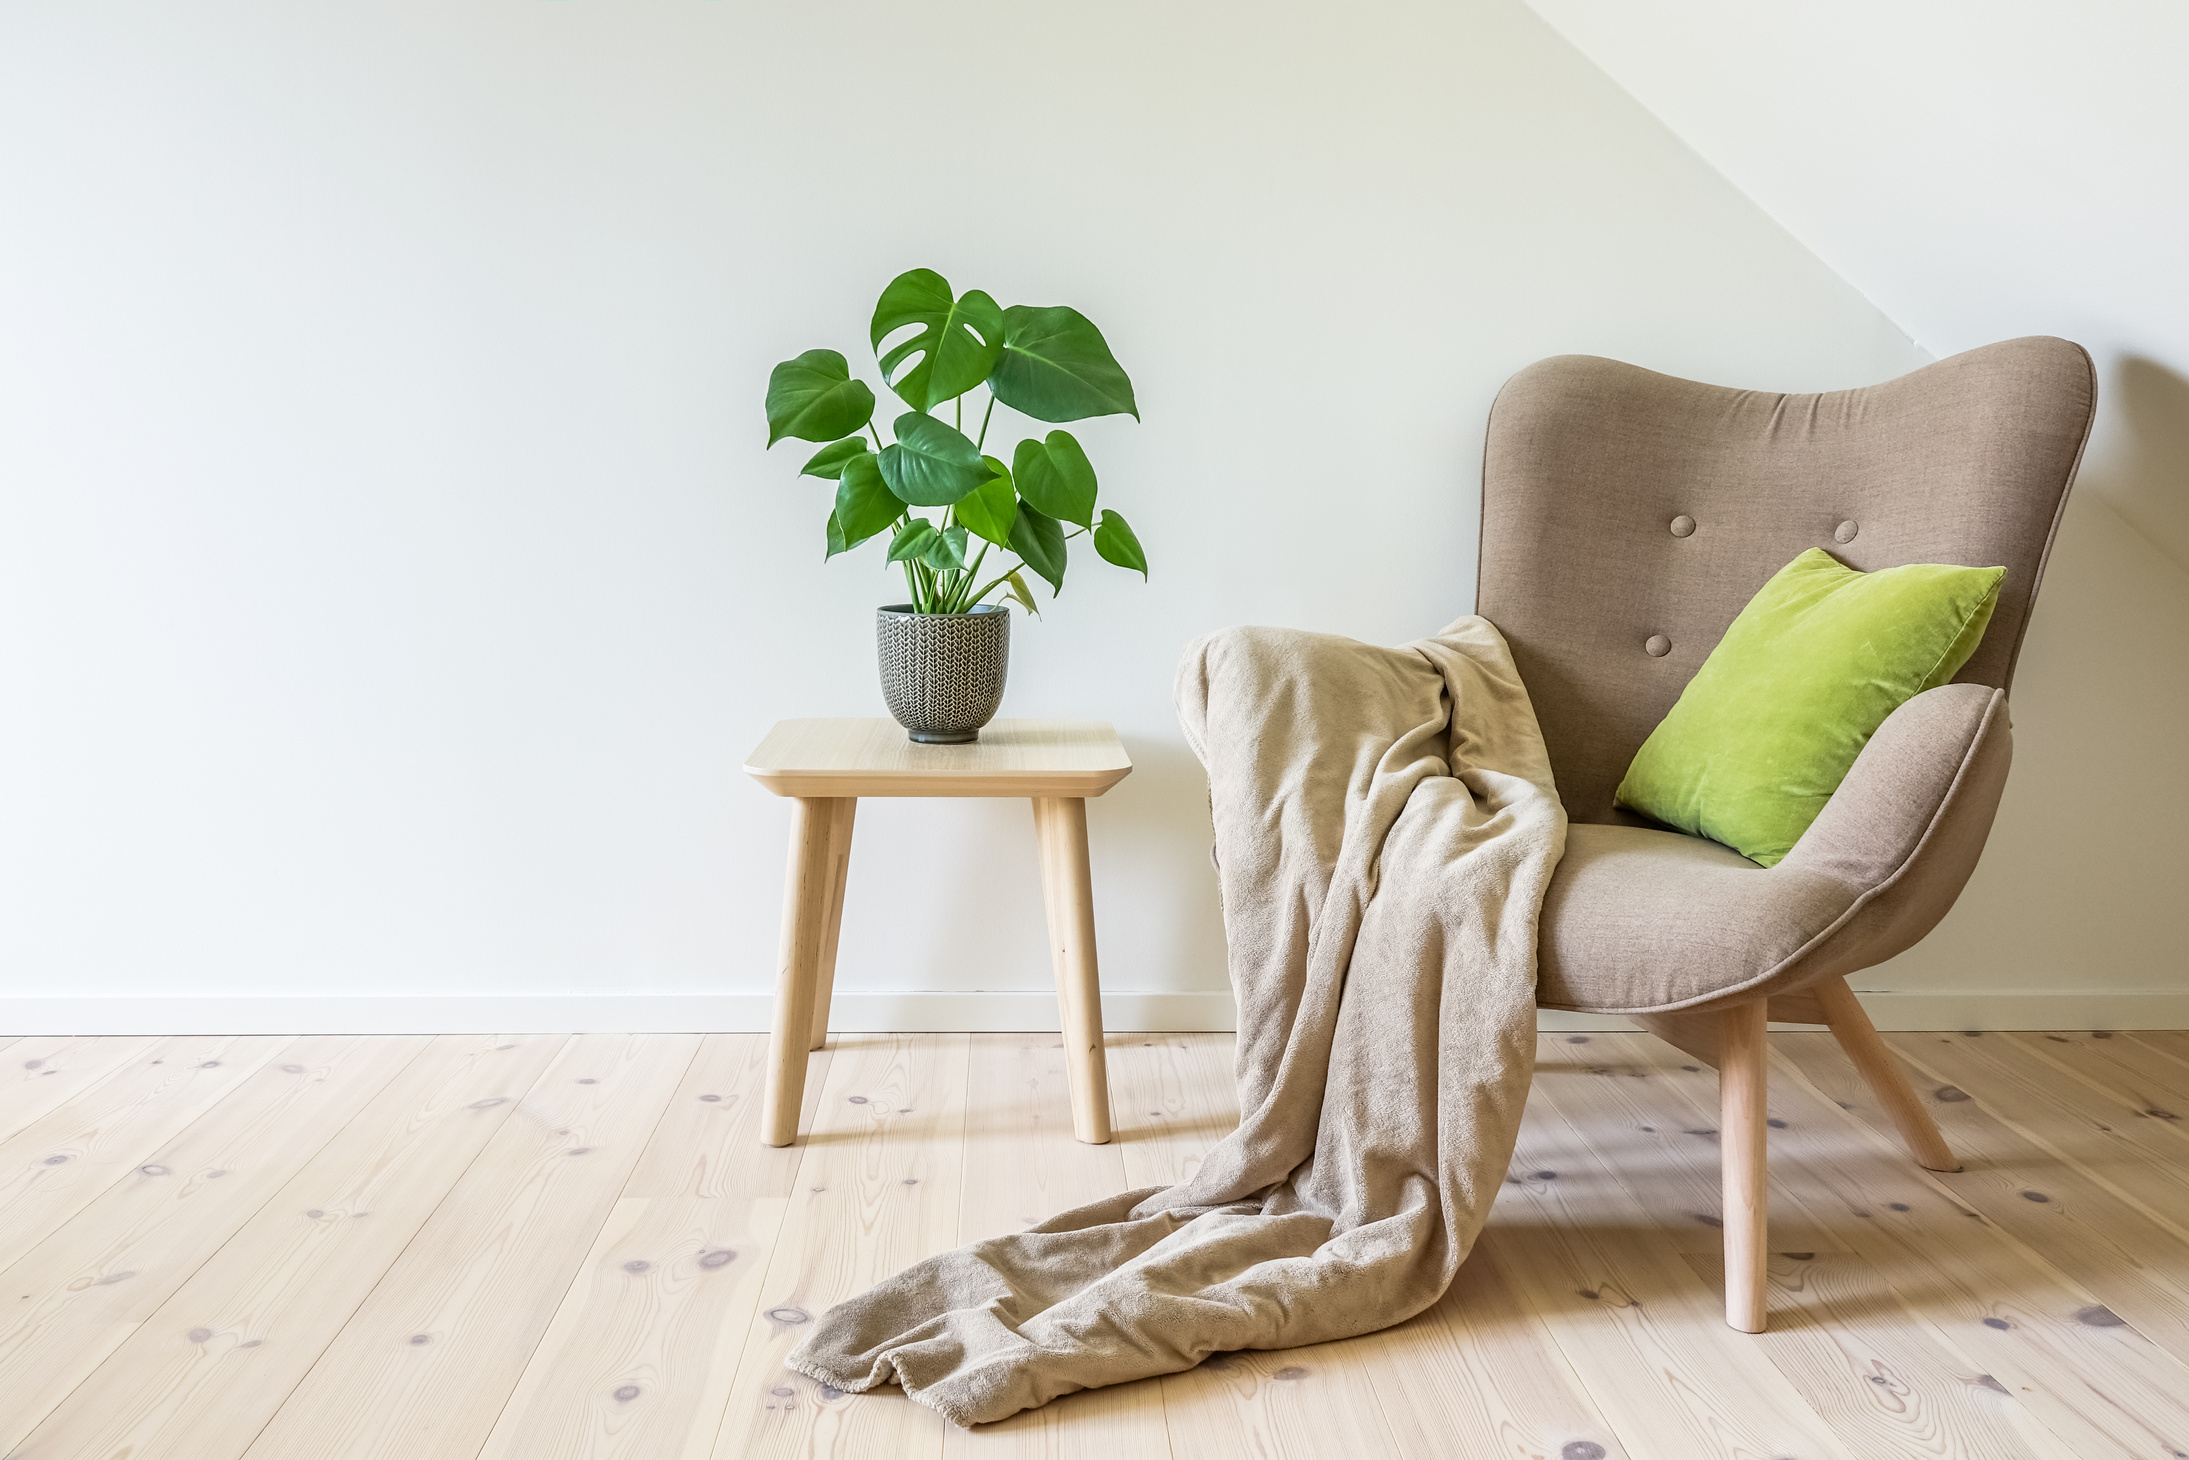 Beige armchair in simple living room interior